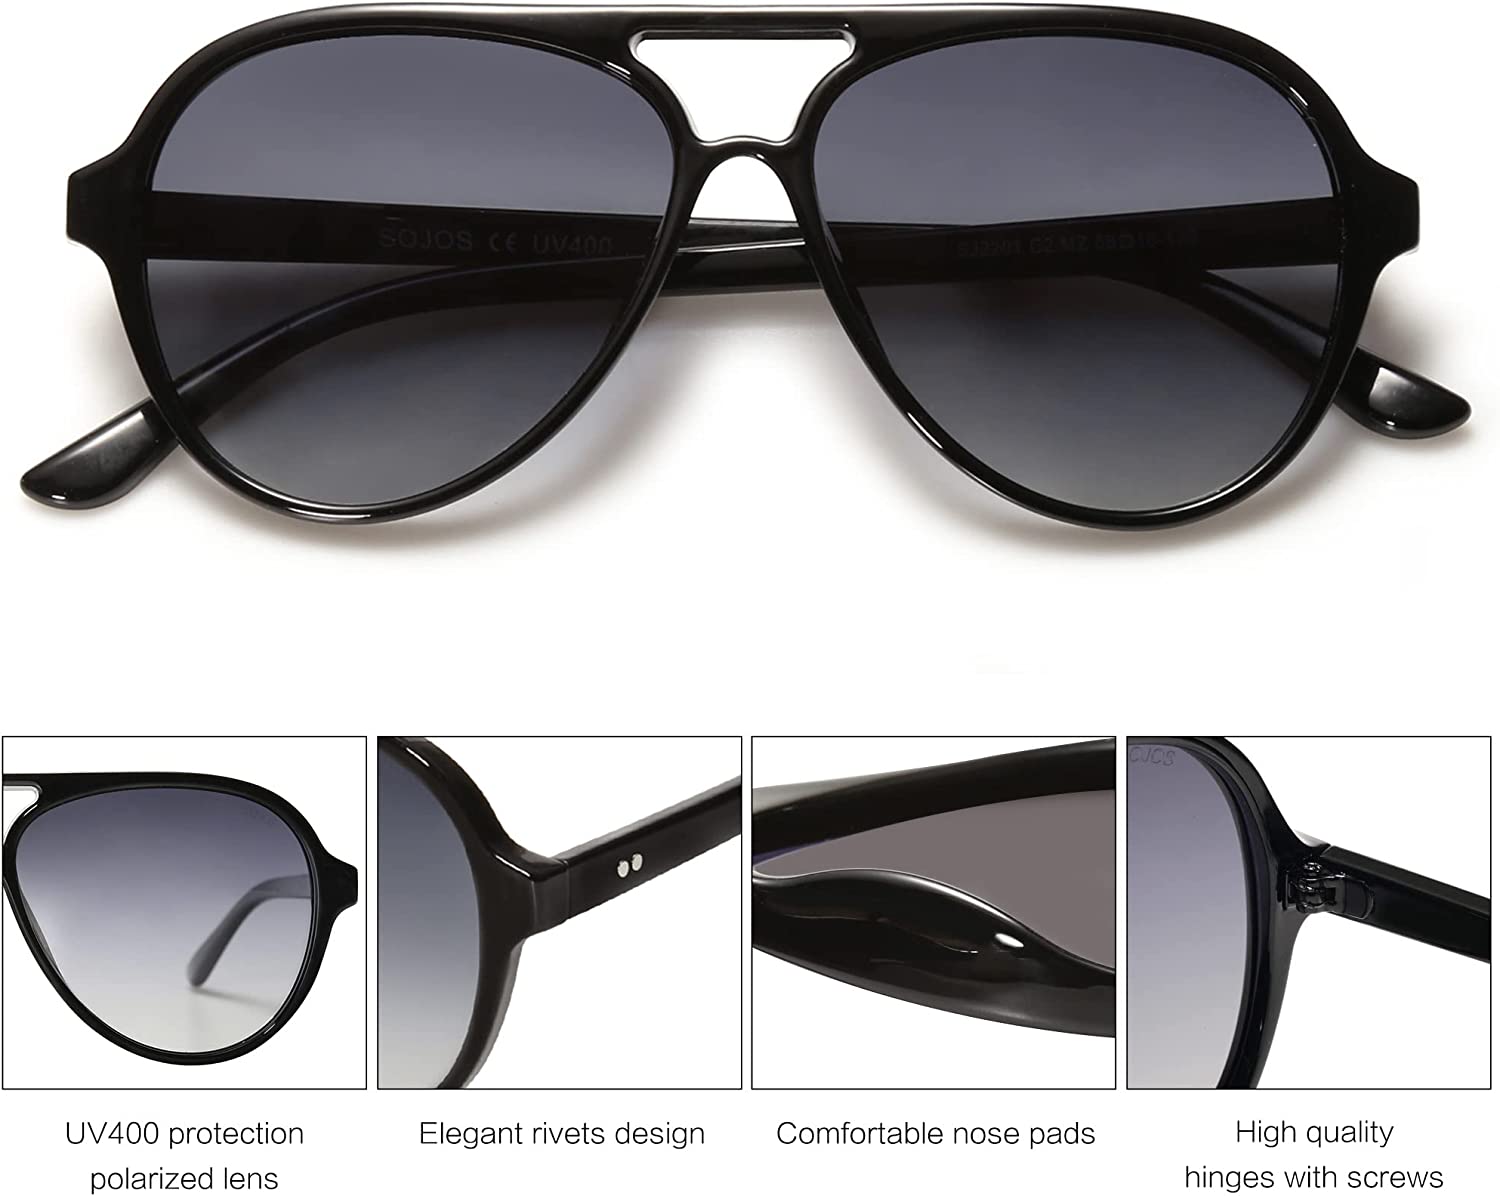 Sojos Sunglasses WholeSale - Price List, Bulk Buy at SupplyLeader.com